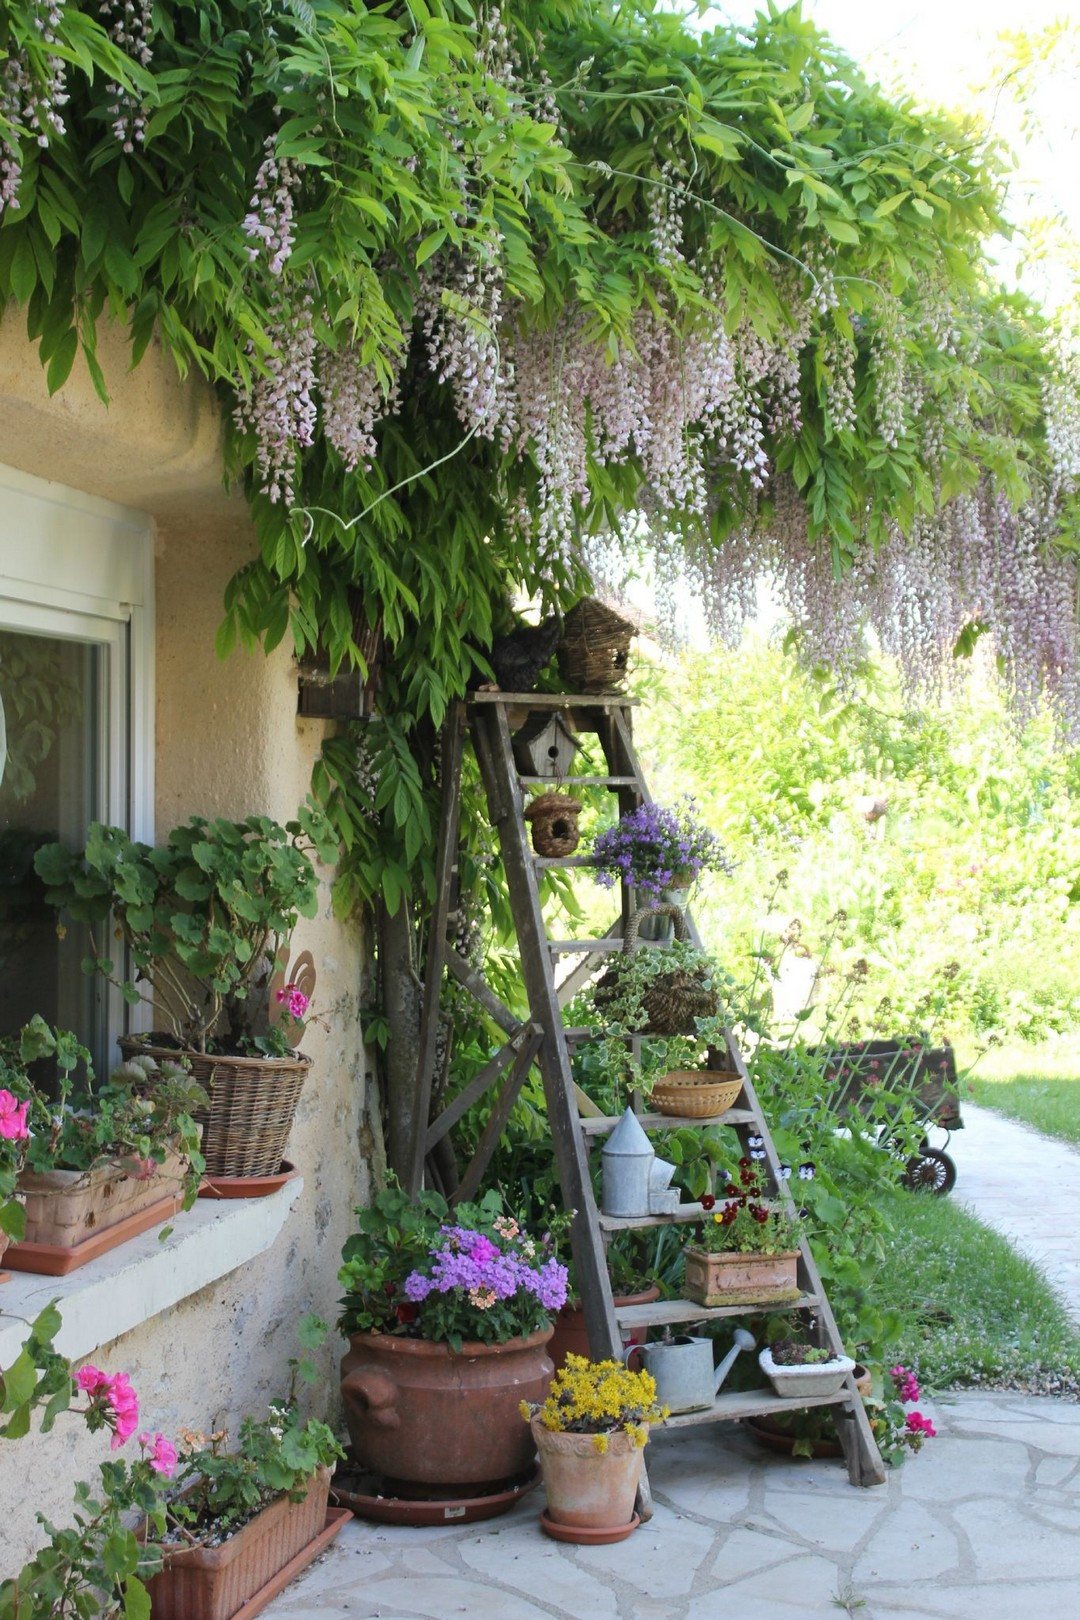 Best ideas about Pinterest Garden Ideas
. Save or Pin Best DIY Cottage Garden Ideas From Pinterest 3 Now.